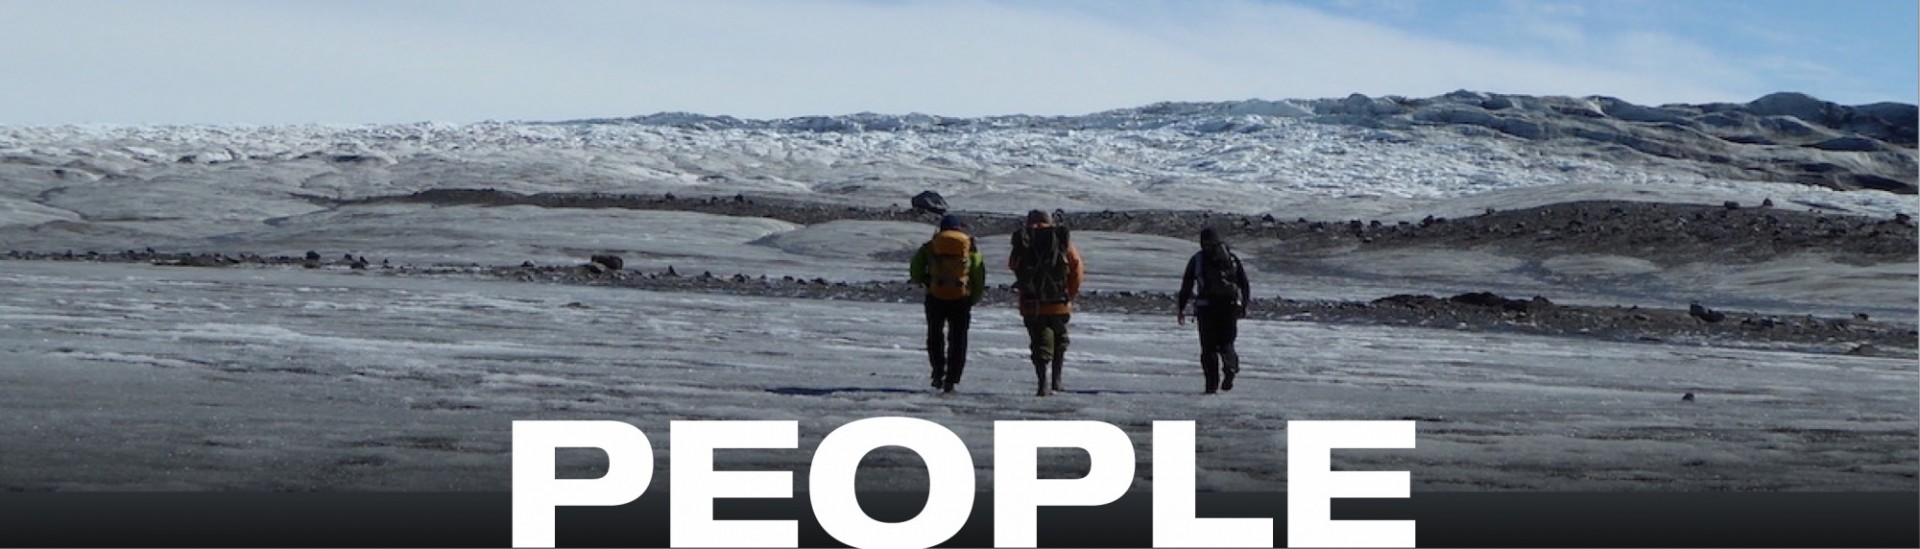 Science team walking across the ice sheet - People